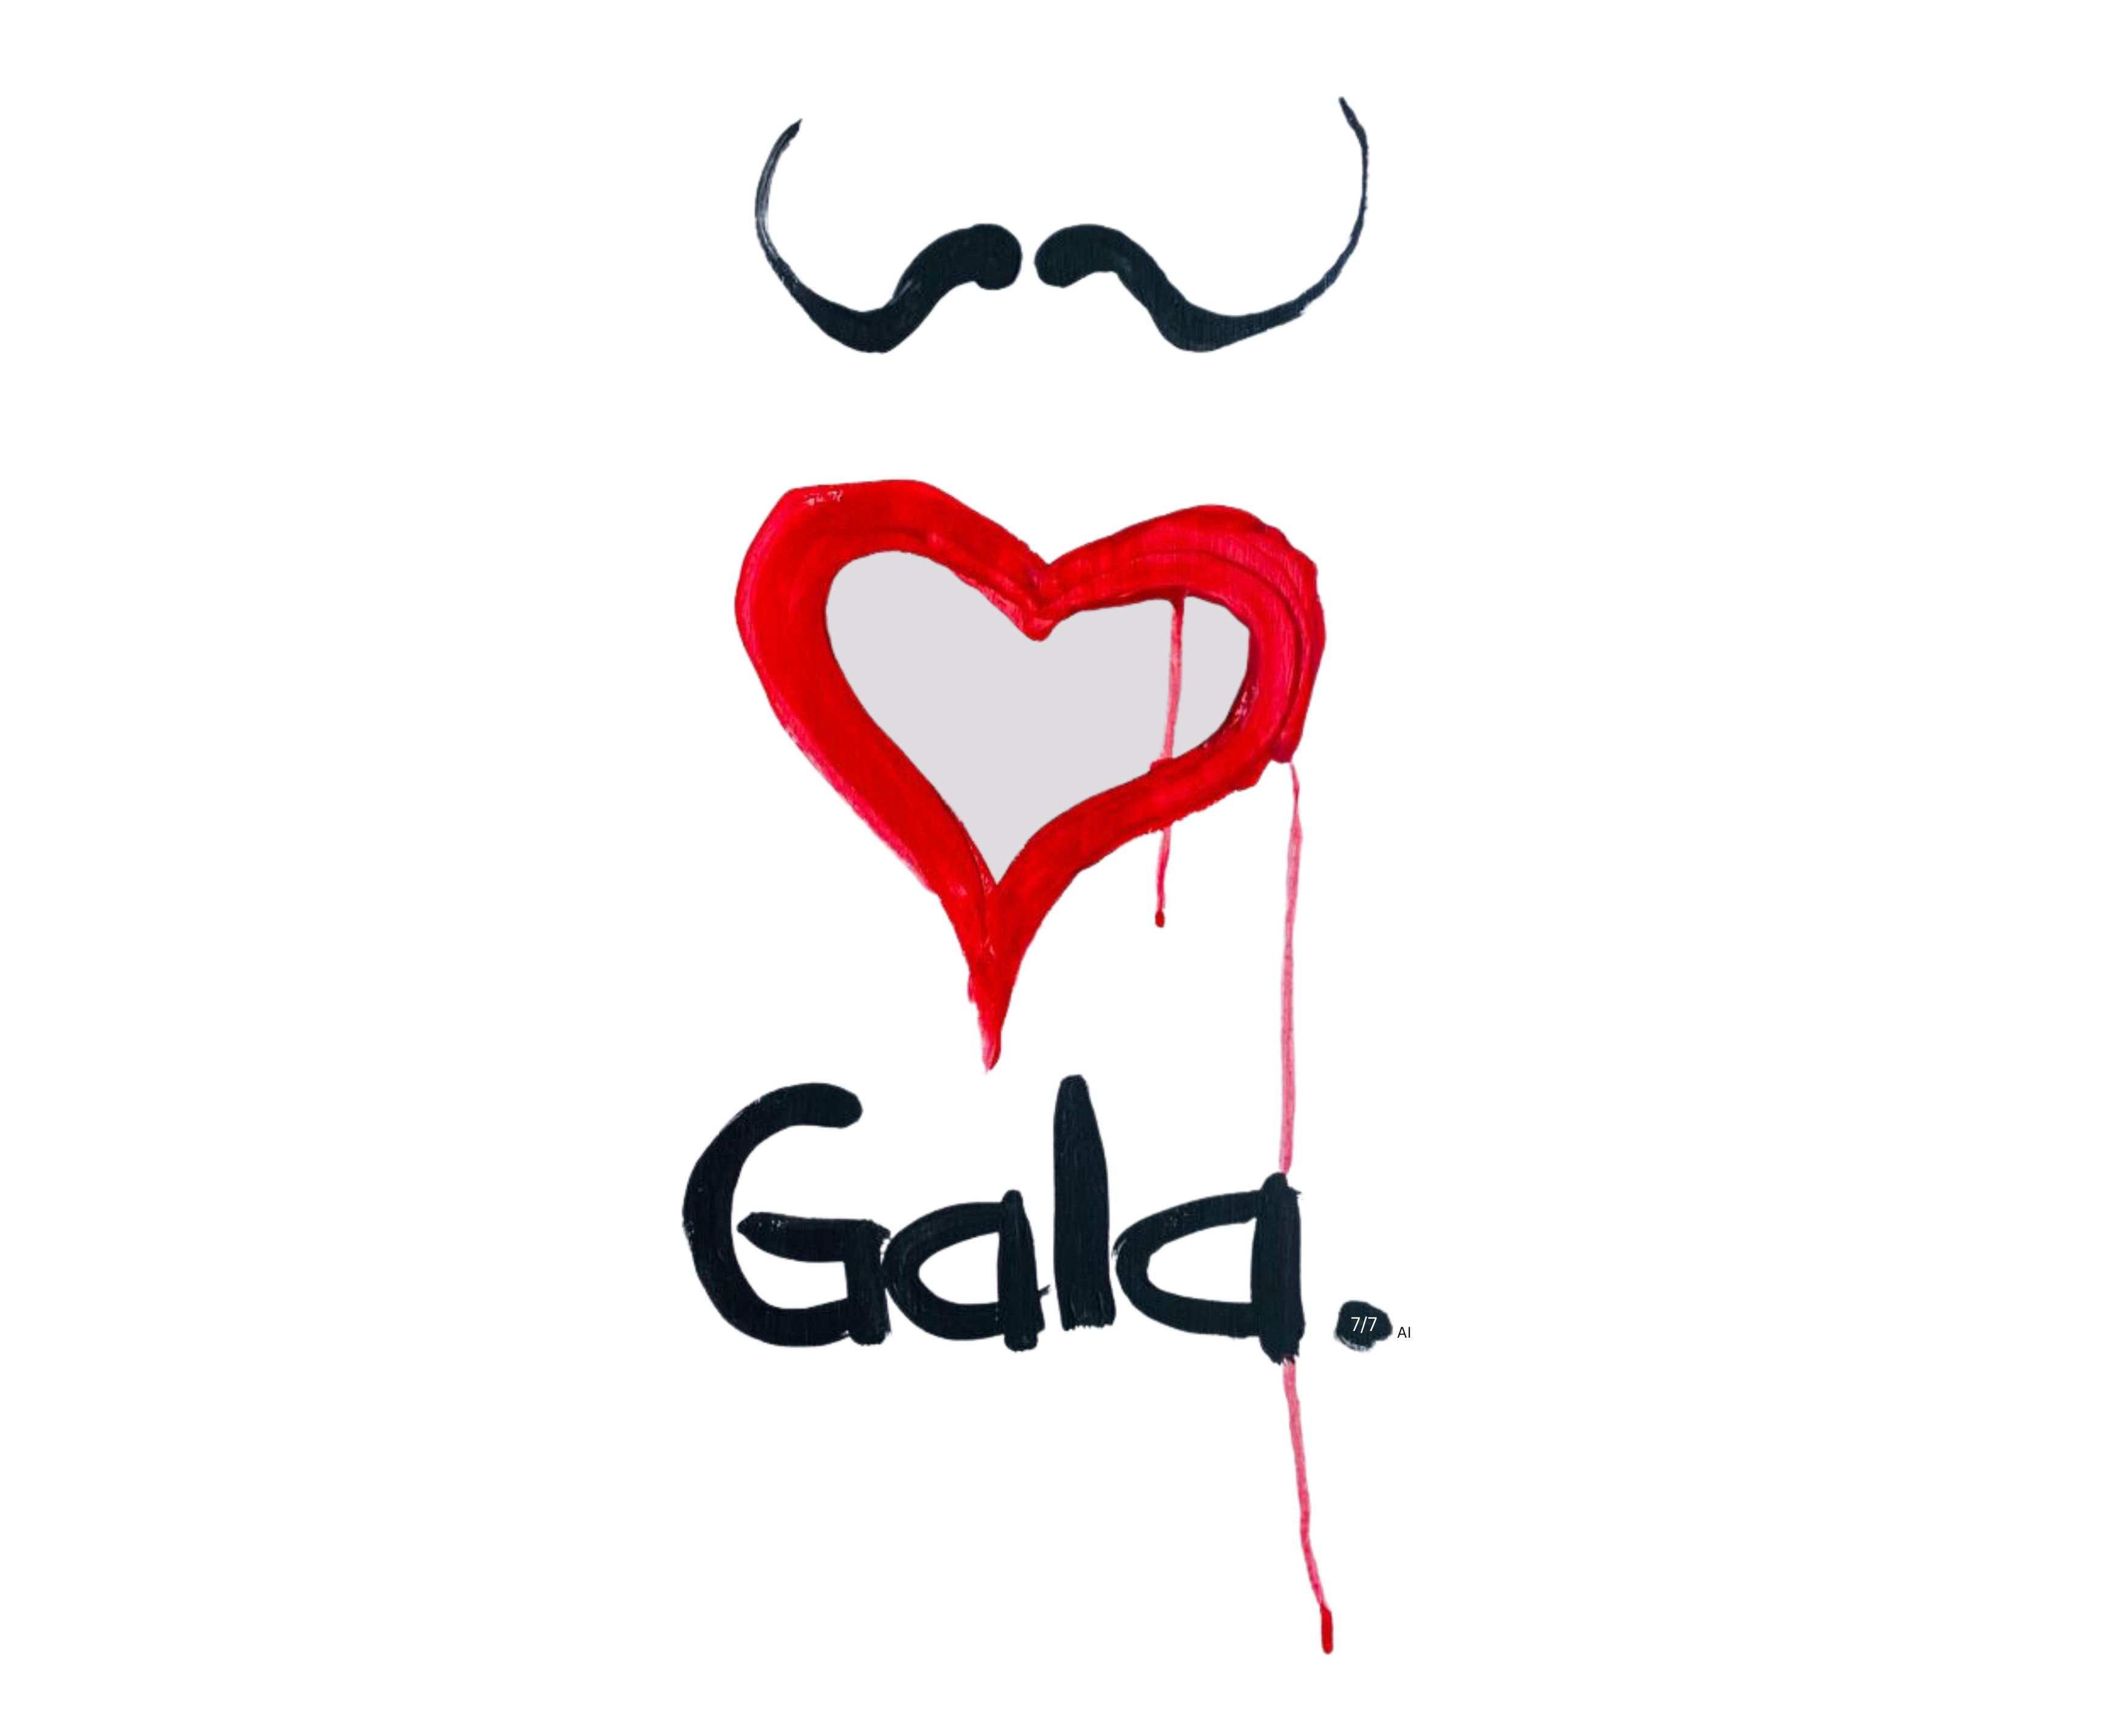 Dali Loves Gala